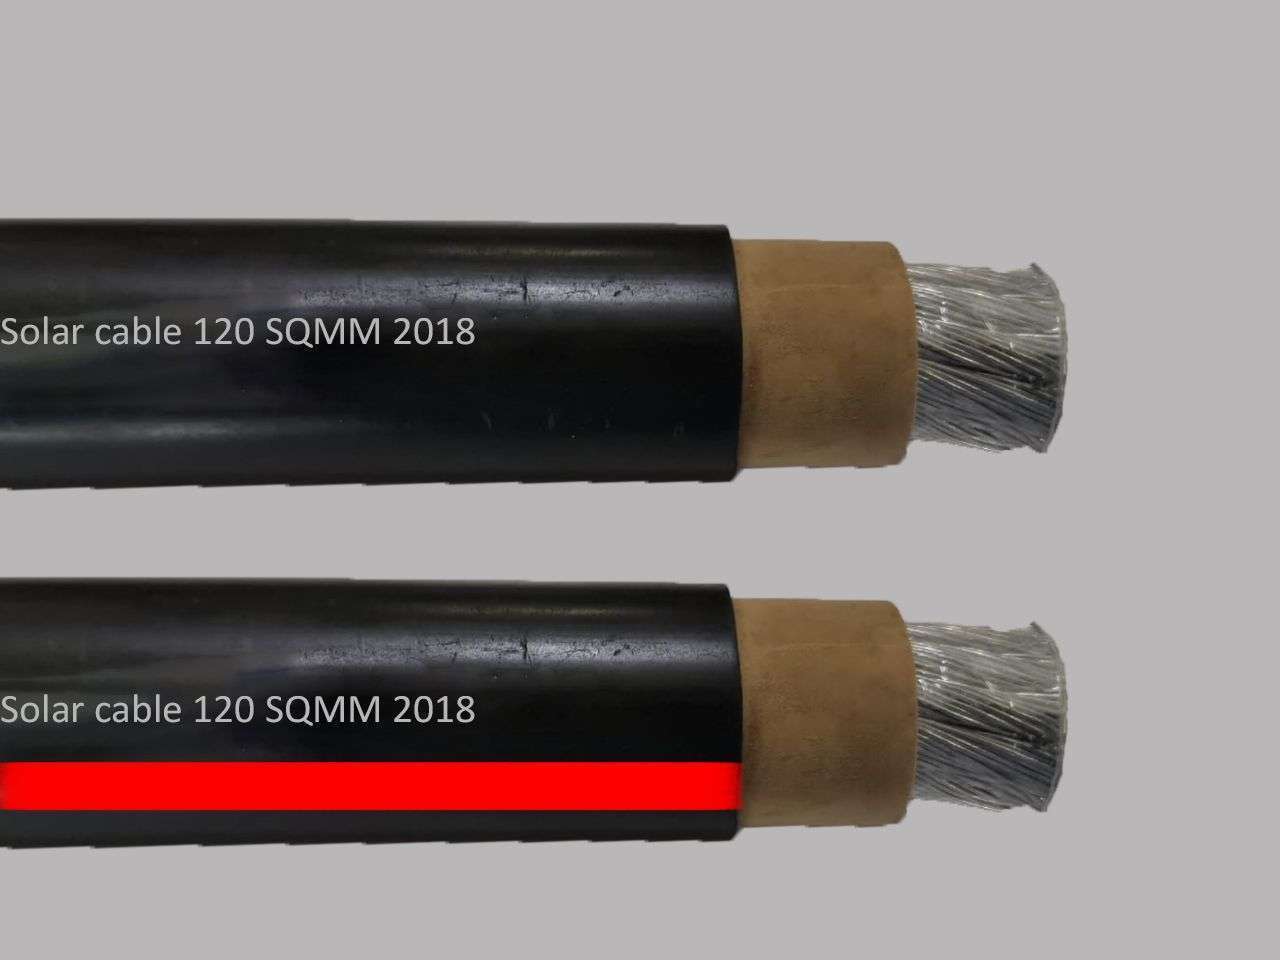 en-certified-dc-solar-cable-120sqm-500mtr-drum-red.jpg